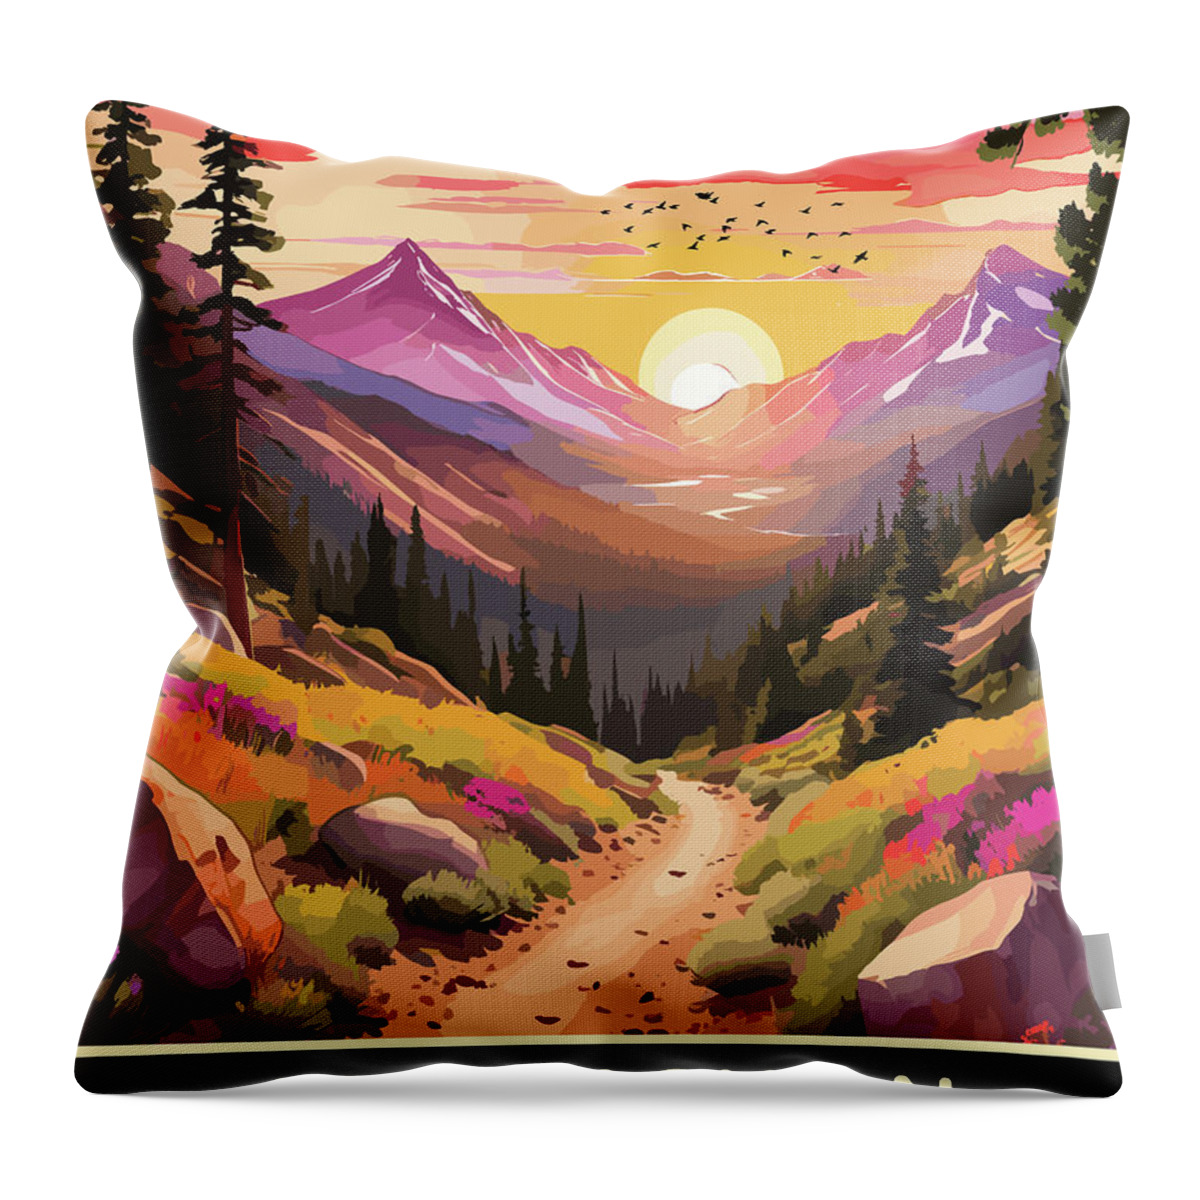 Appalachian Throw Pillow featuring the digital art Appalachian Trail on Sunset by Long Shot